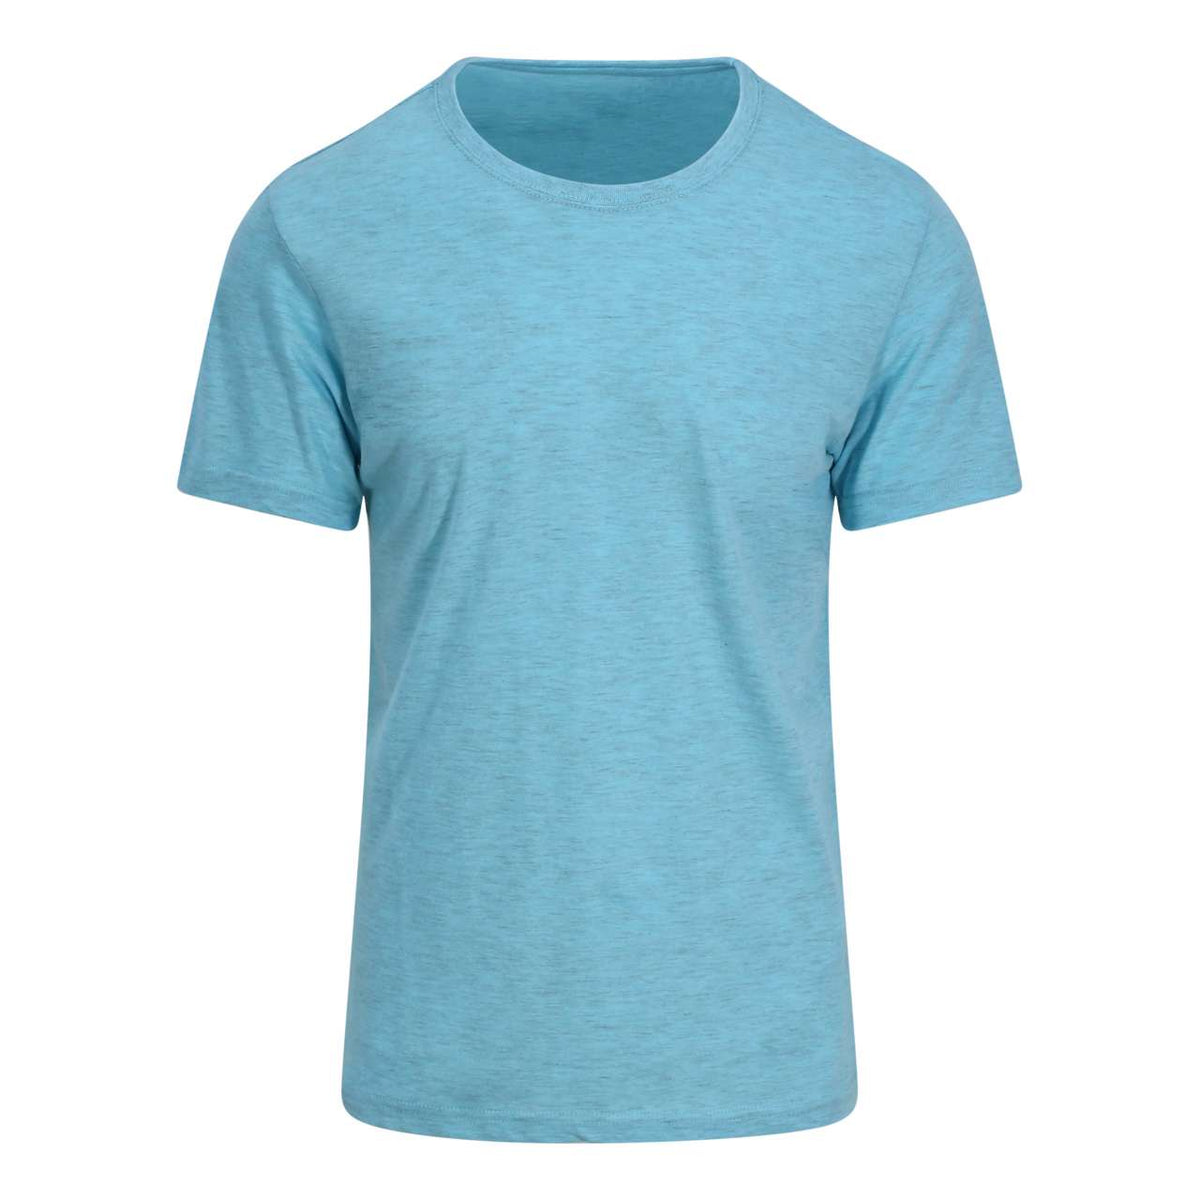 Just Ts Herren T-Shirt Kurzarm V-Neck Basic Shirt Rundhals